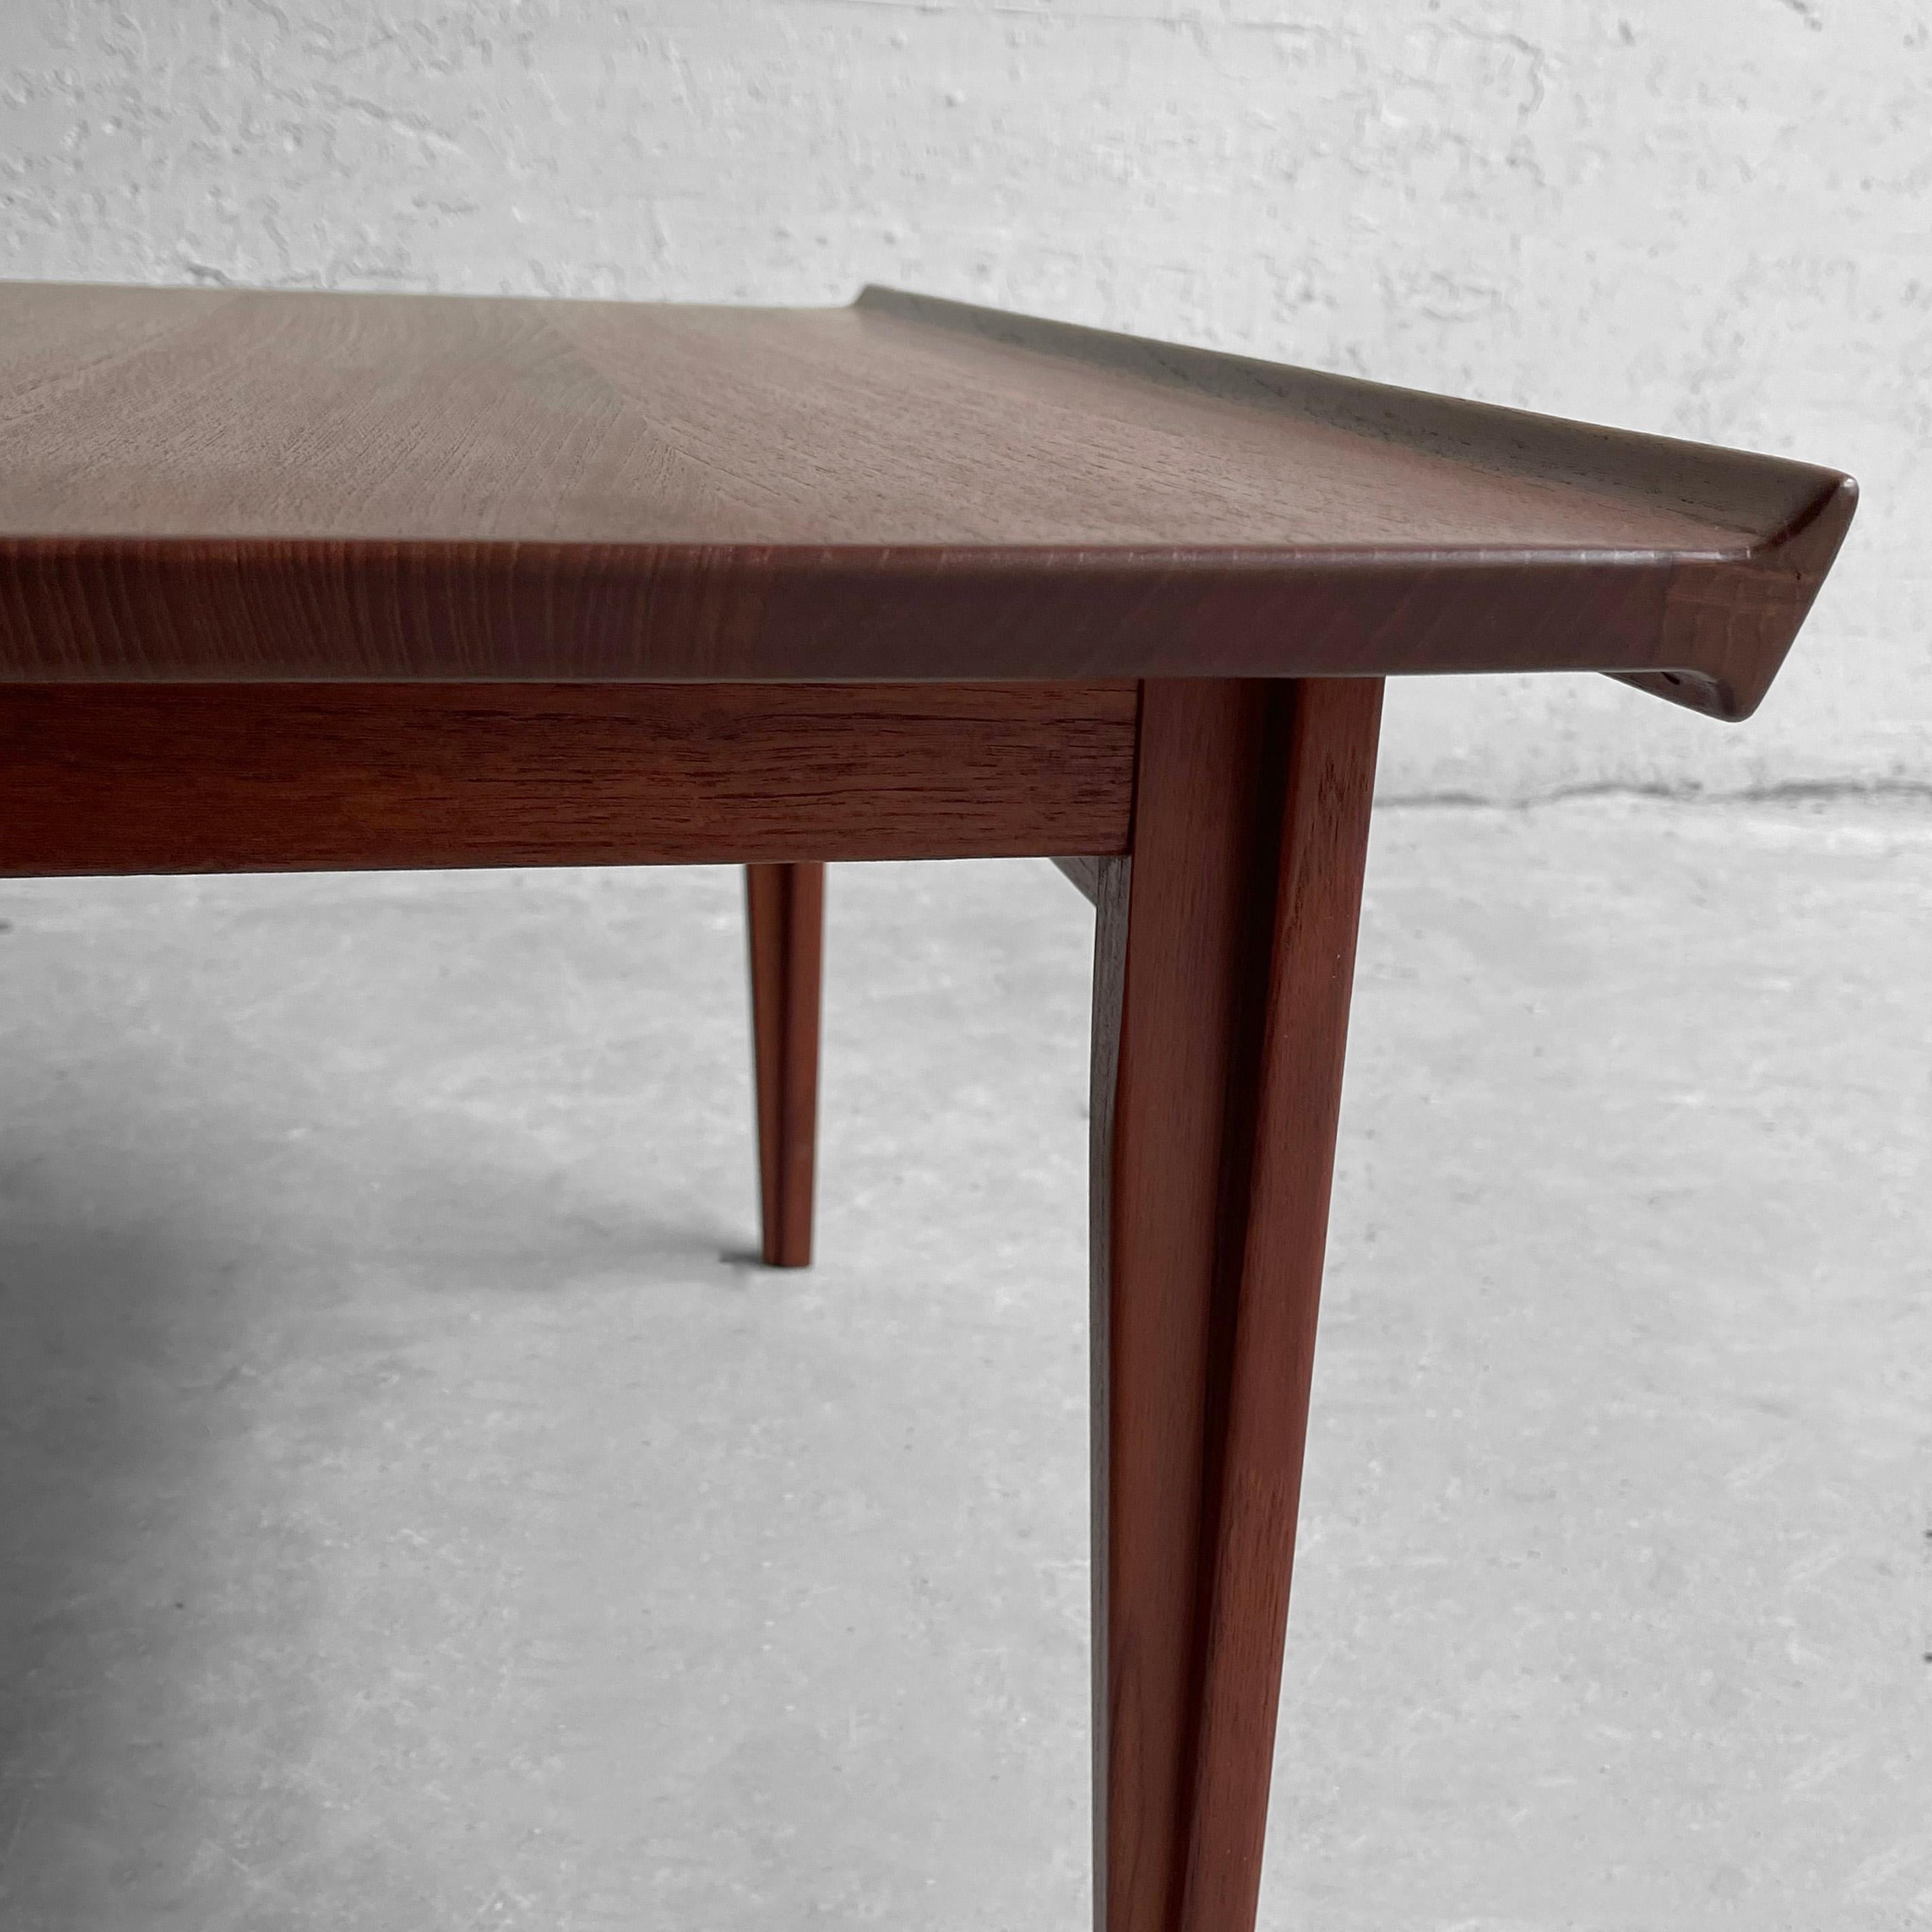 20th Century Teak Model 534 Coffee Table by Finn Juhl for France & Son